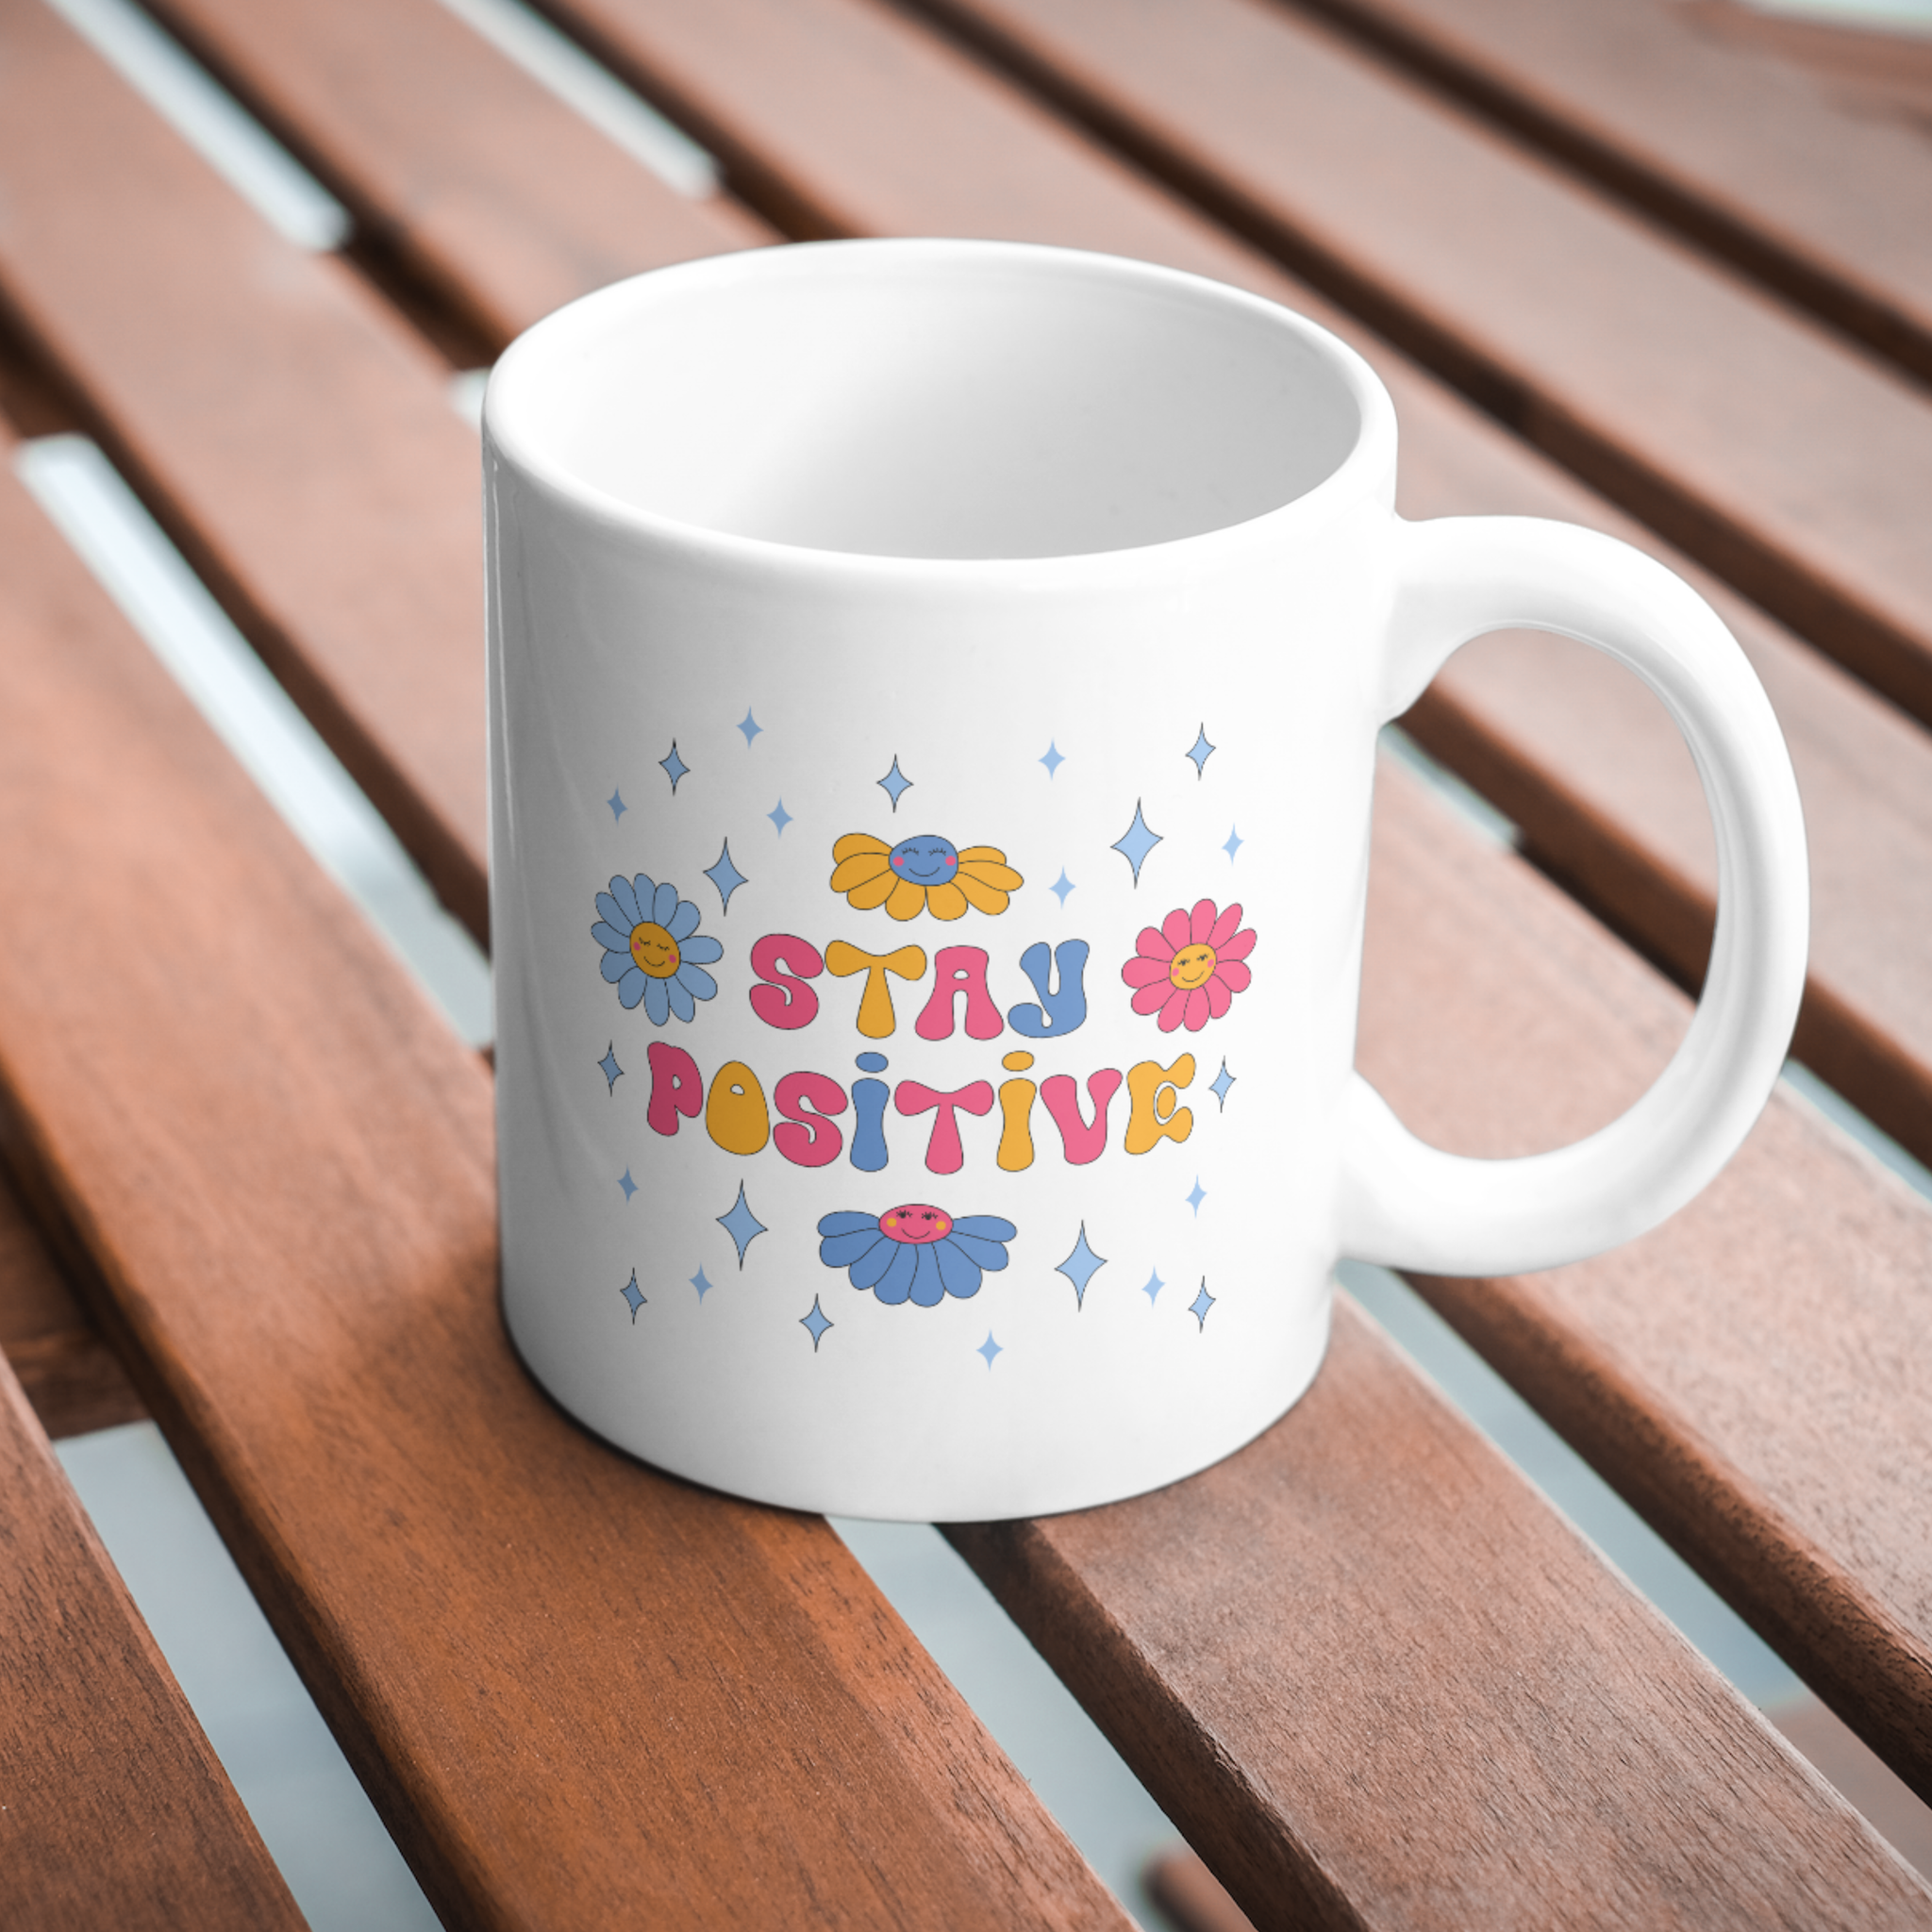 Stay Positive Coffee and Tea Ceramic Mug 11oz